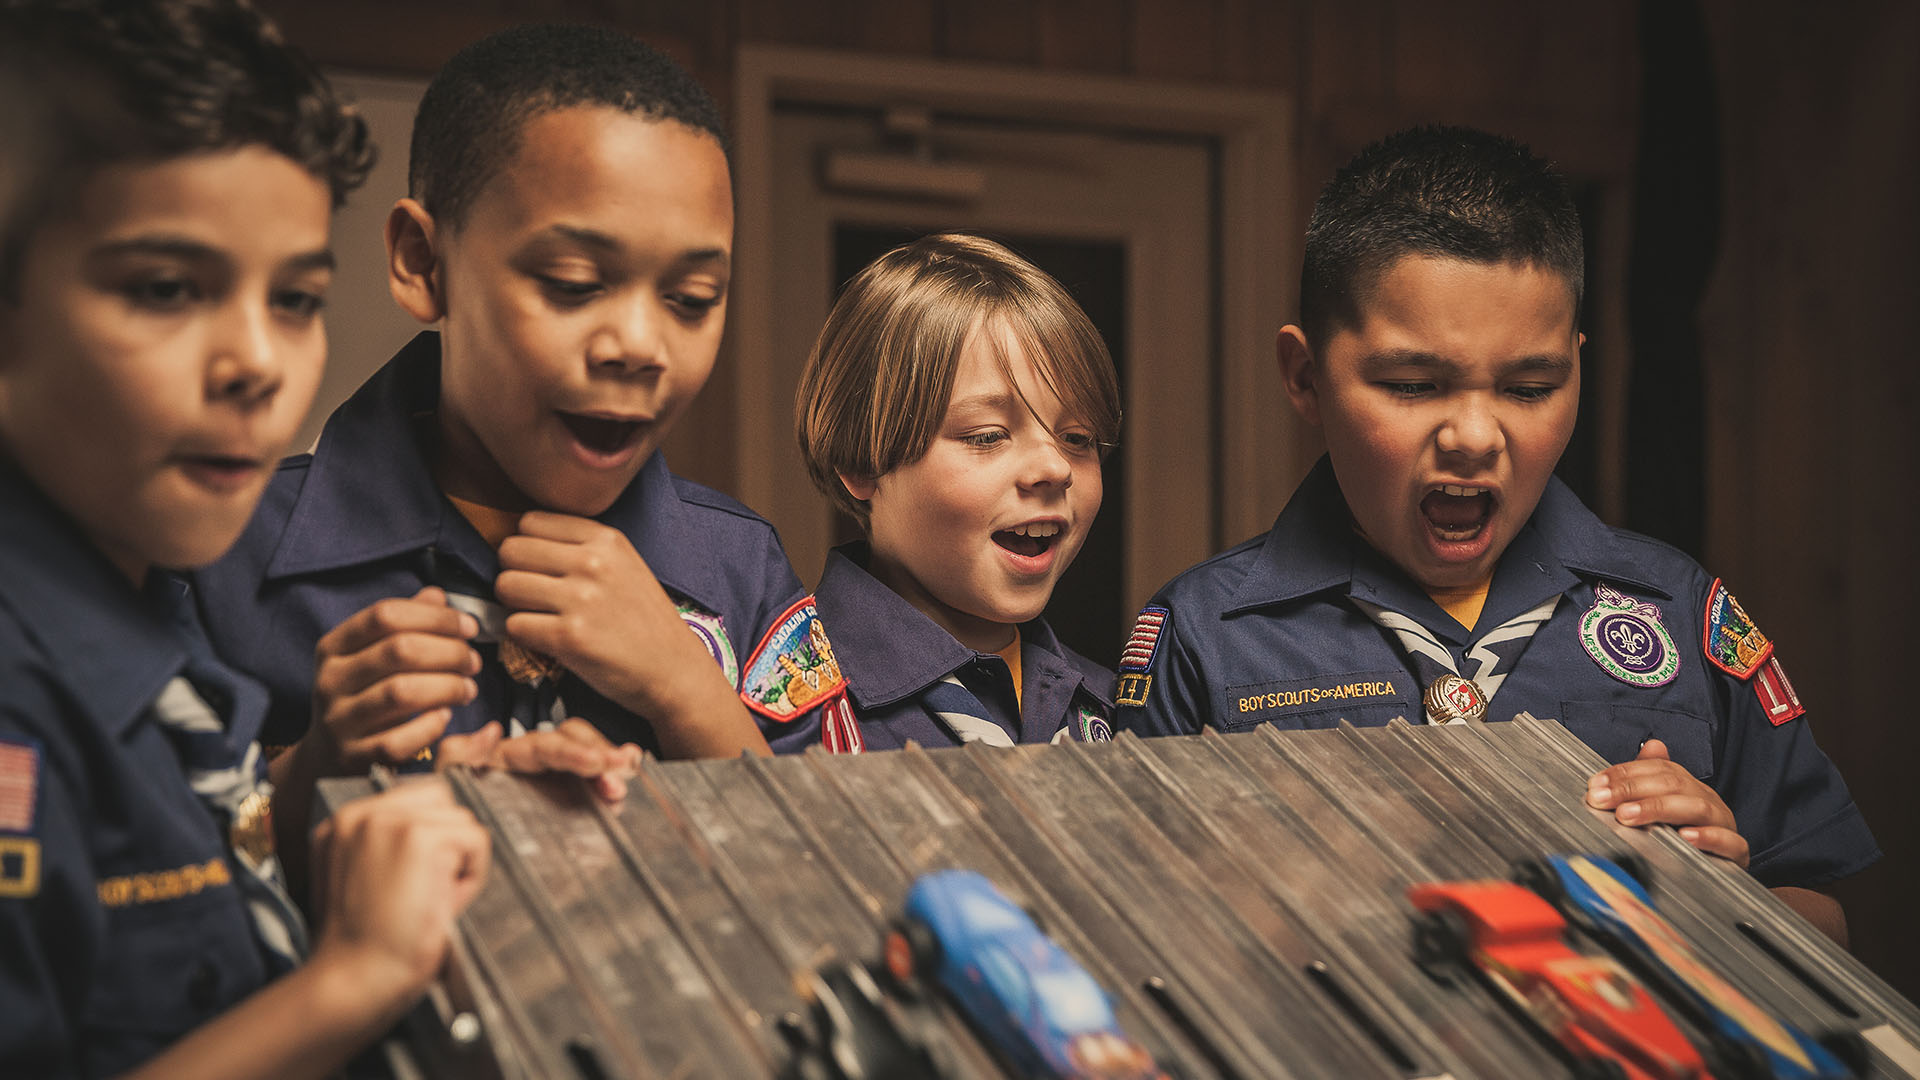 Cub Scouts - Boy Scouts of America Coastal Georgia Council - Savannah, GA